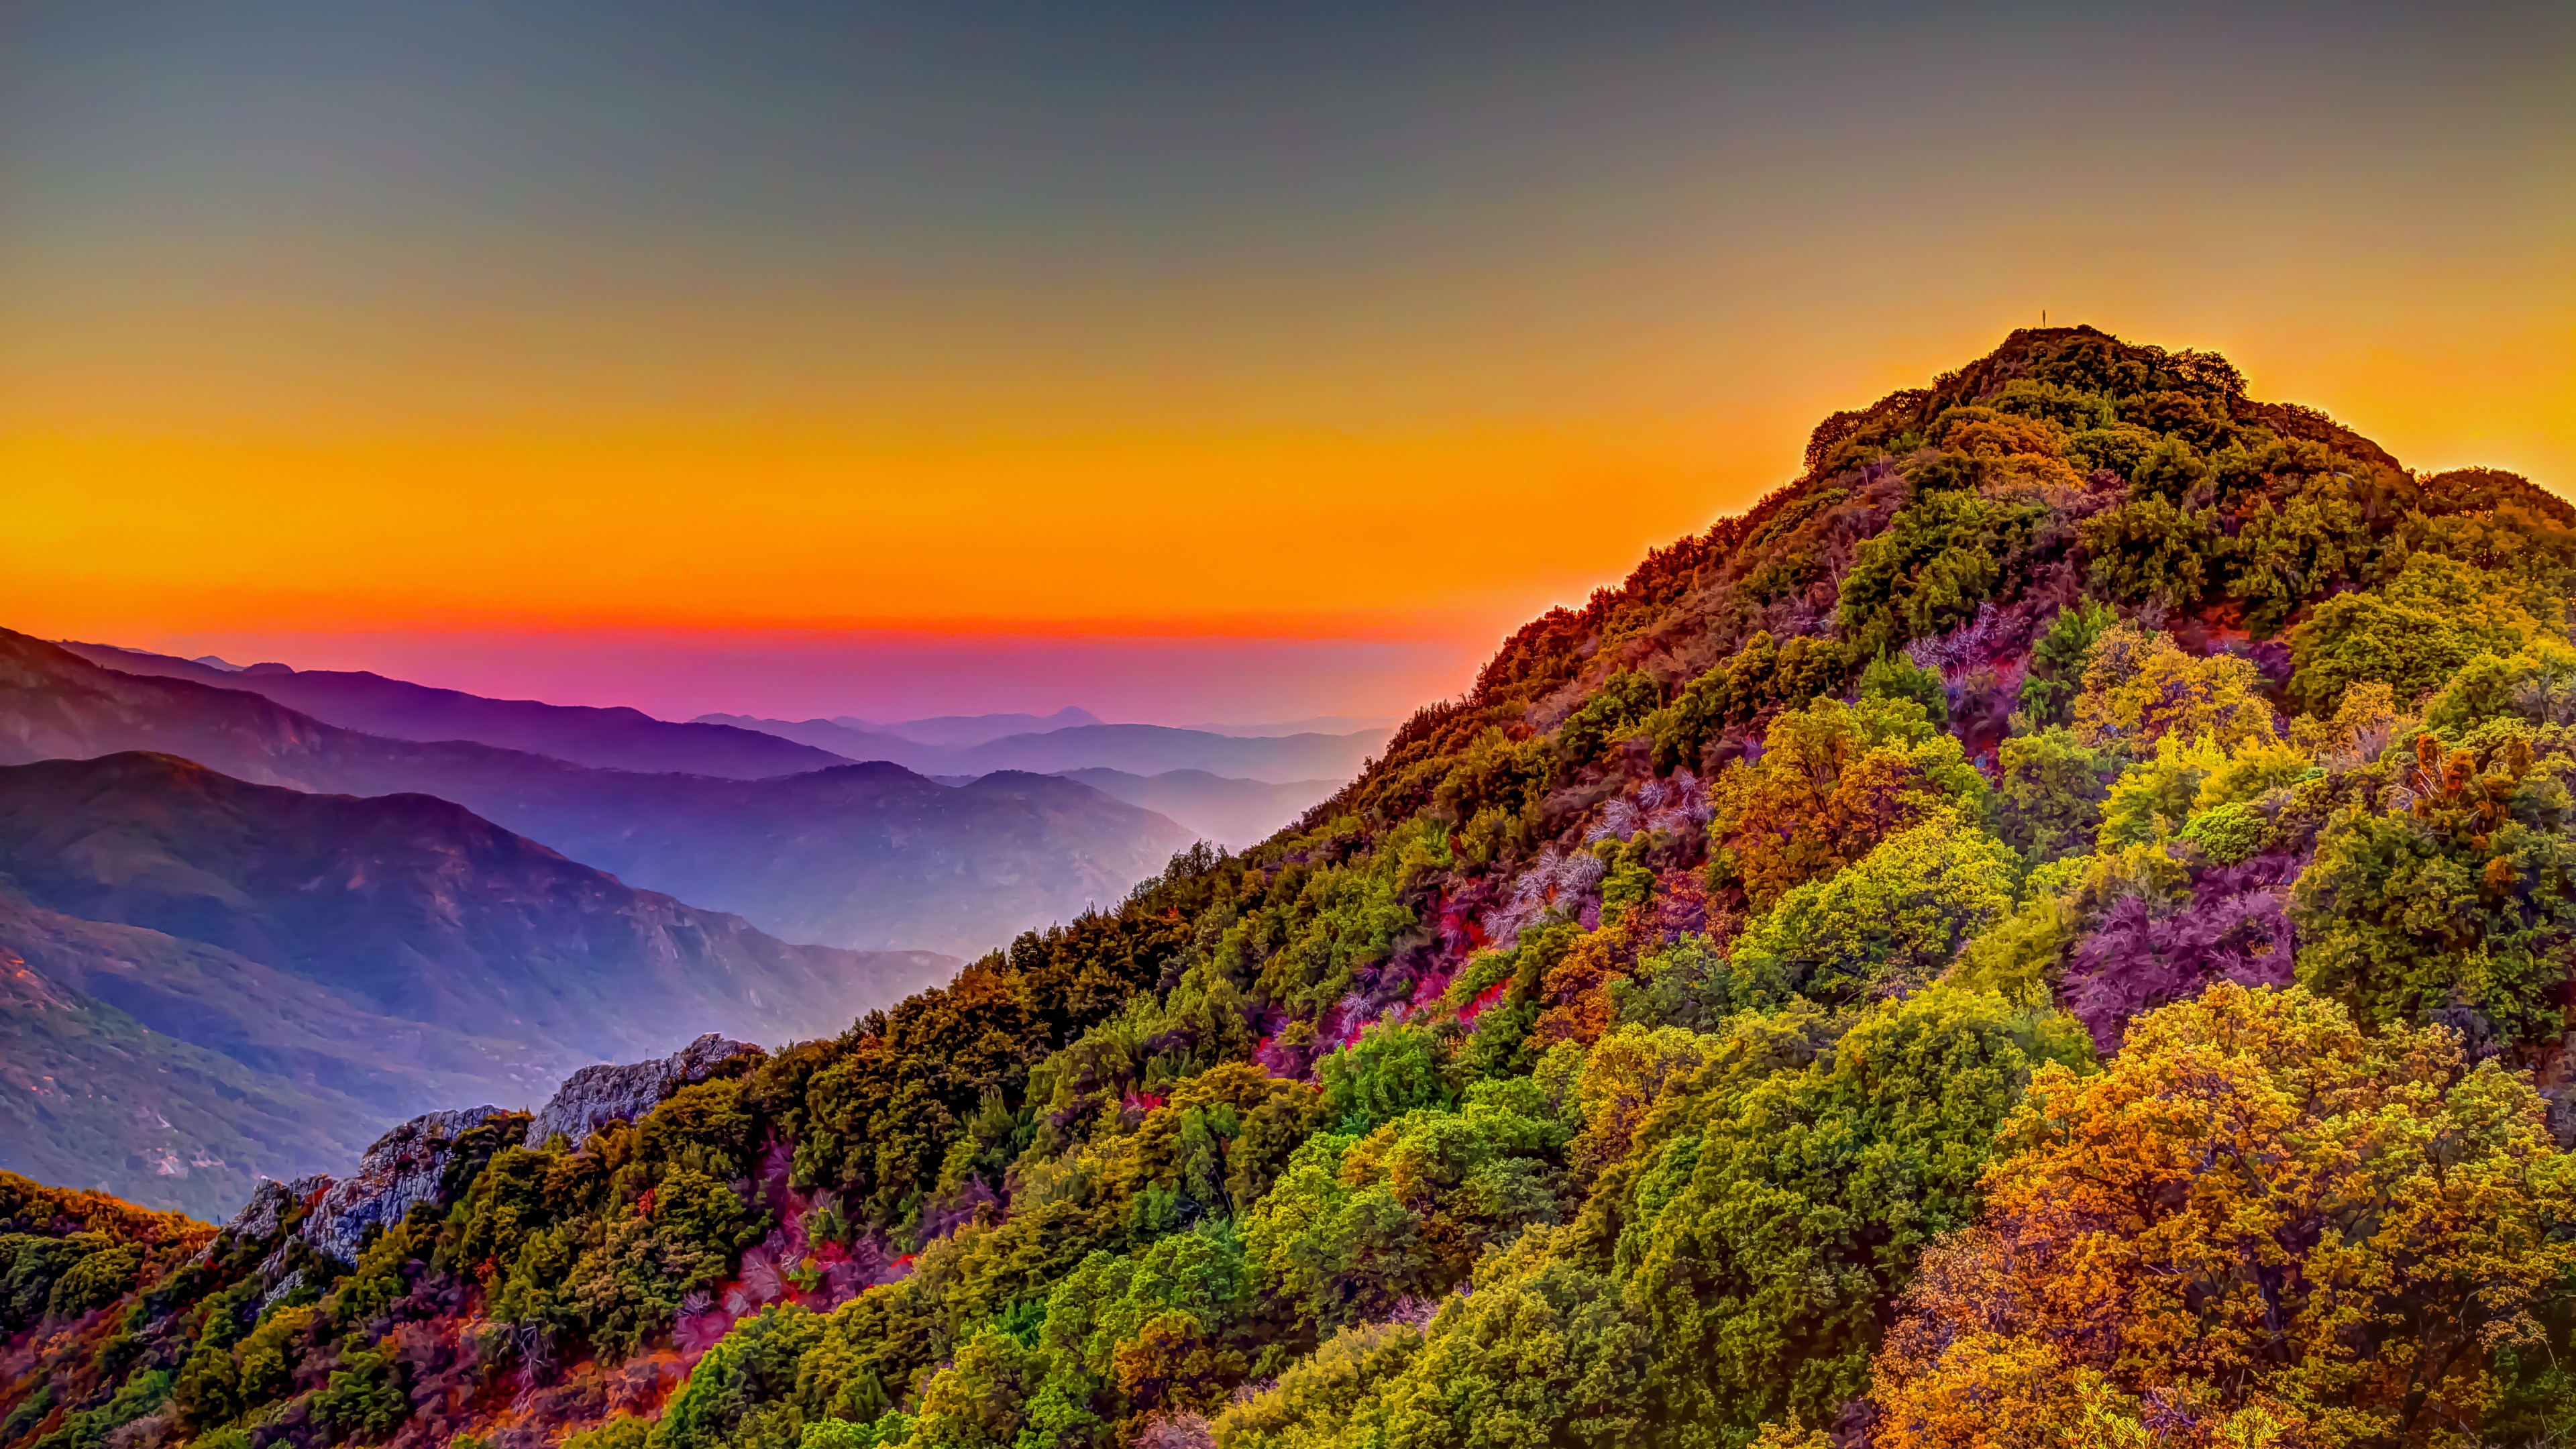 colorful nature desktop backgrounds